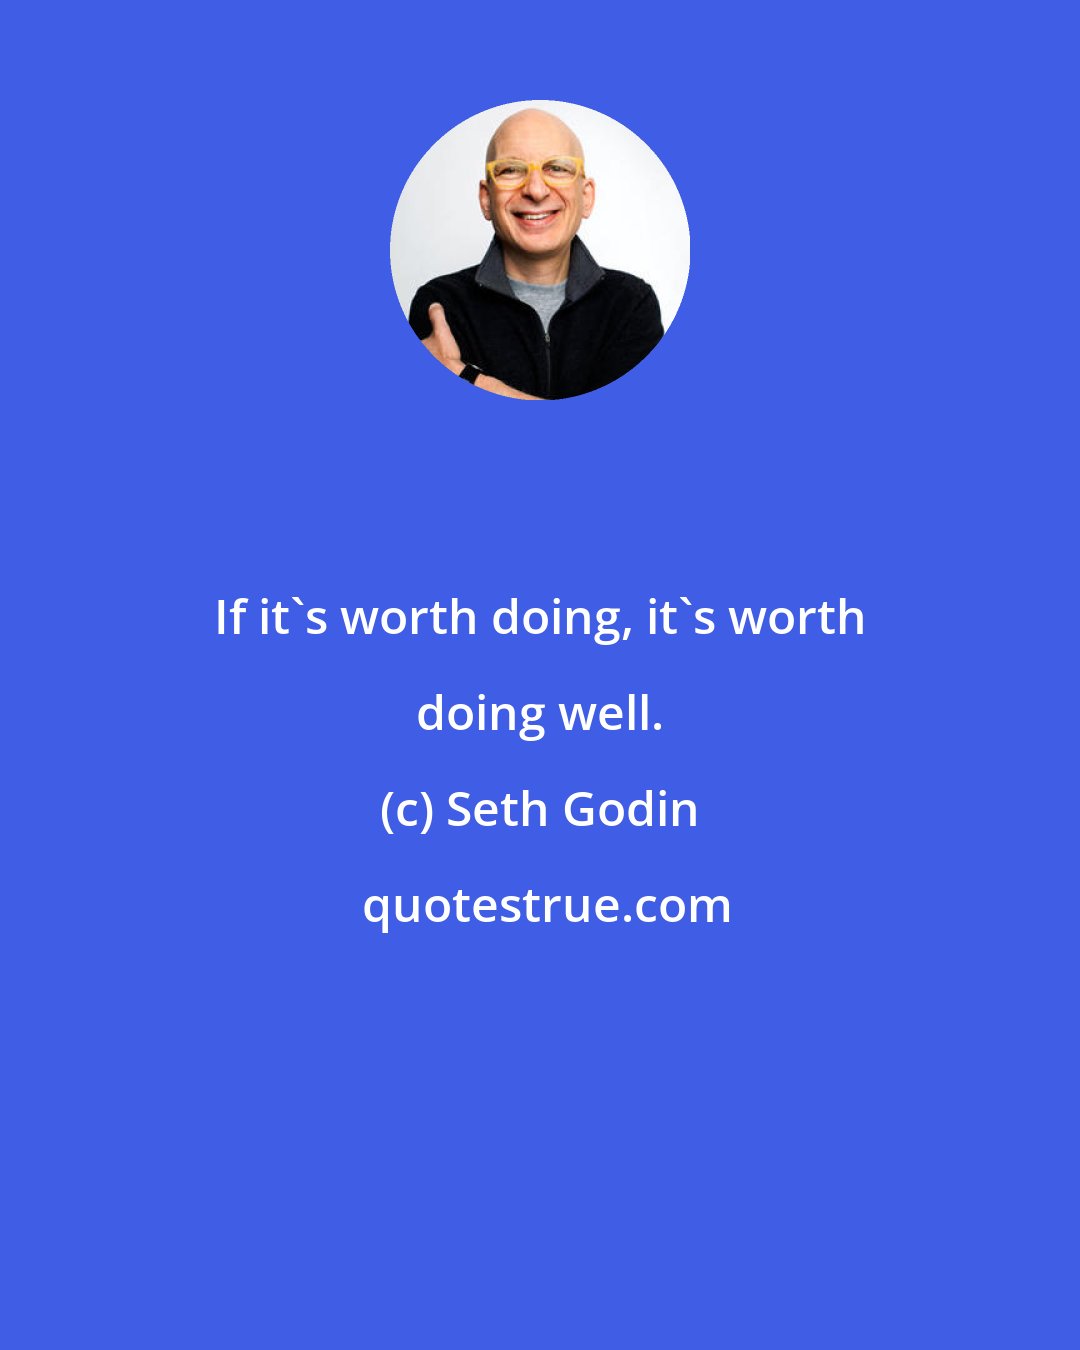 Seth Godin: If it's worth doing, it's worth doing well.